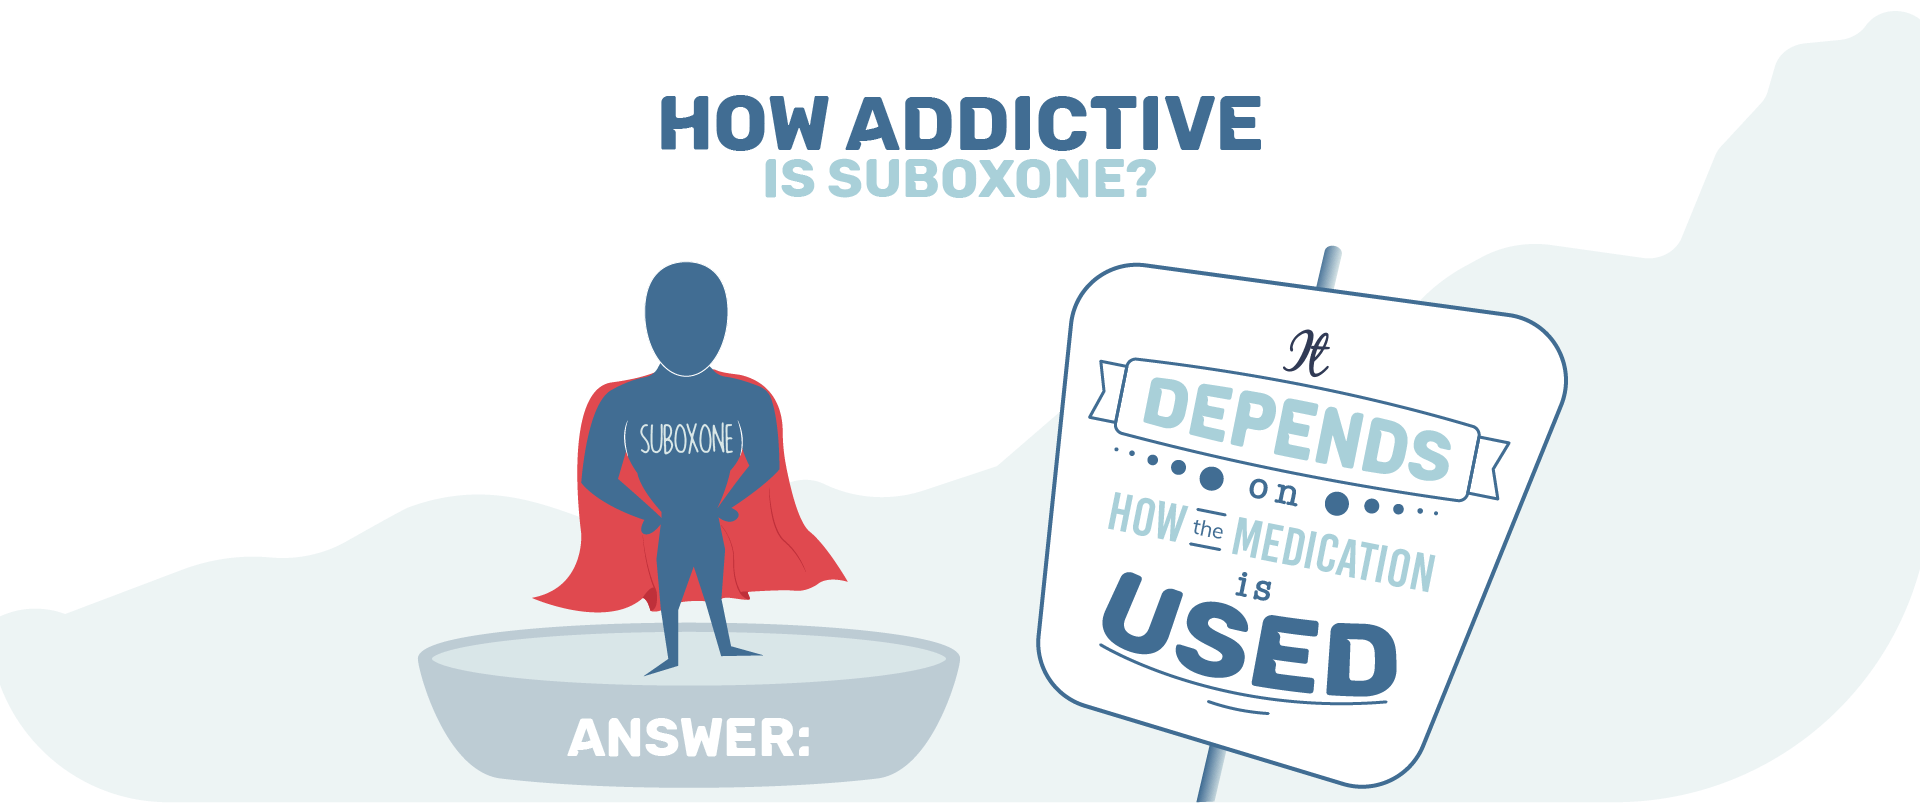 How Addictive is Suboxone